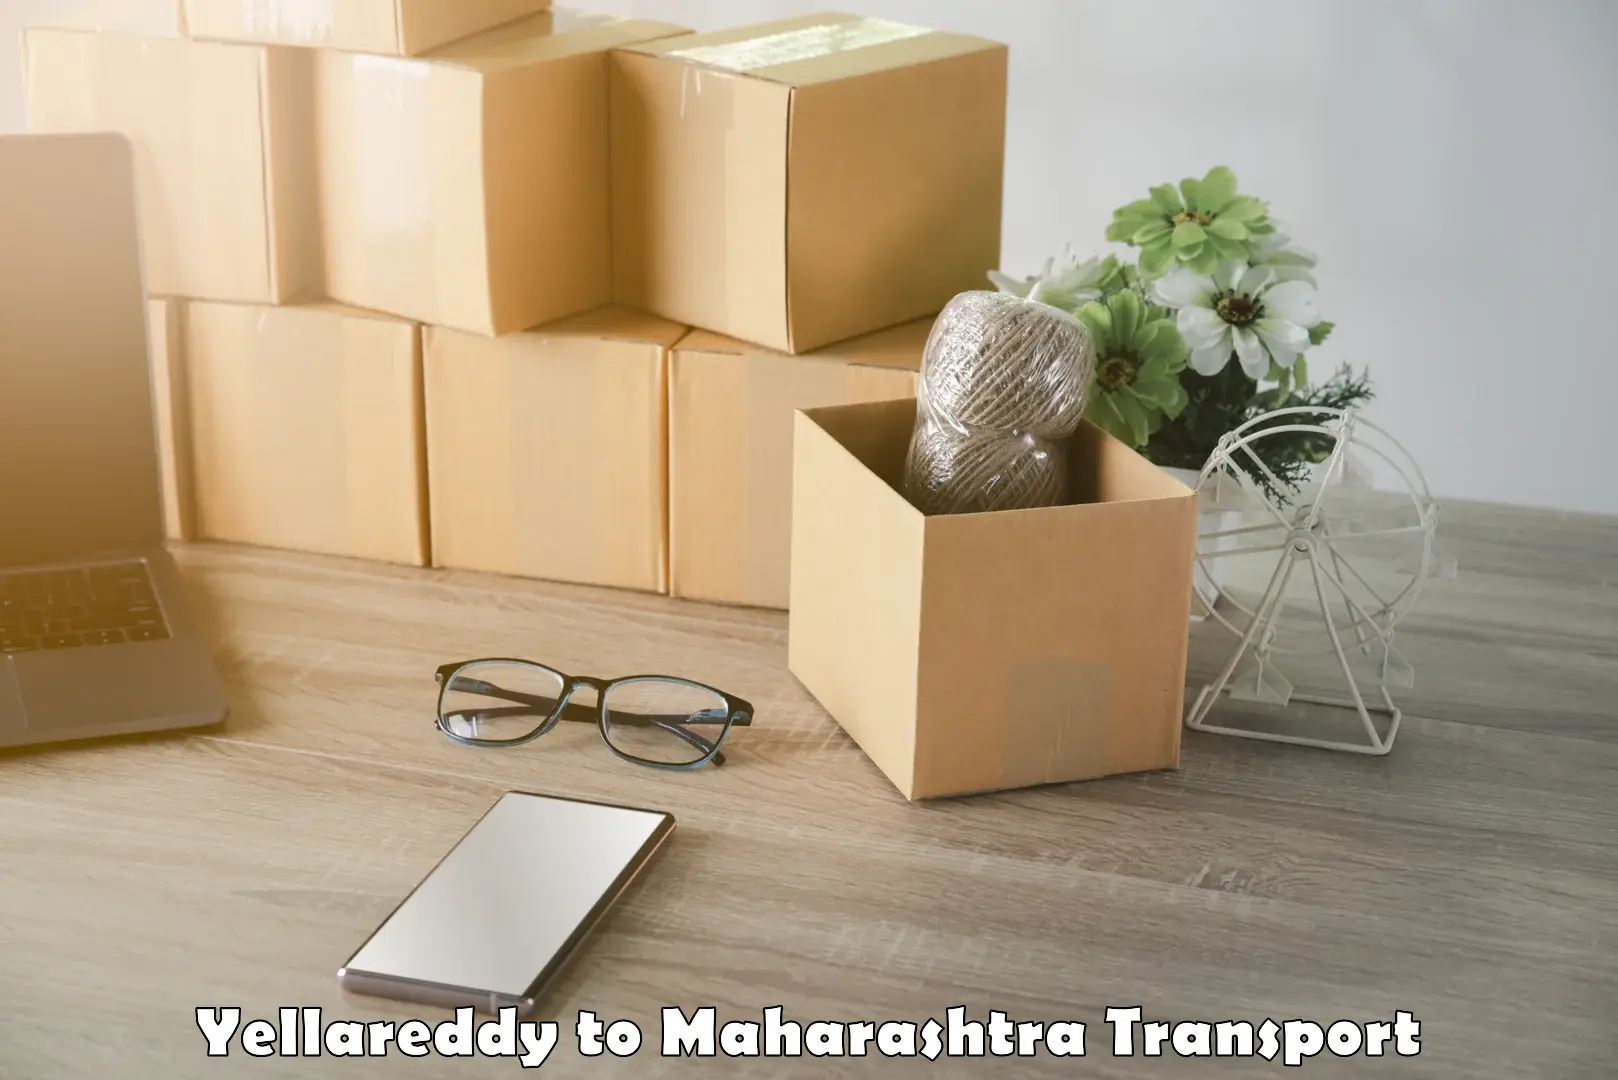 Daily parcel service transport in Yellareddy to Maharashtra